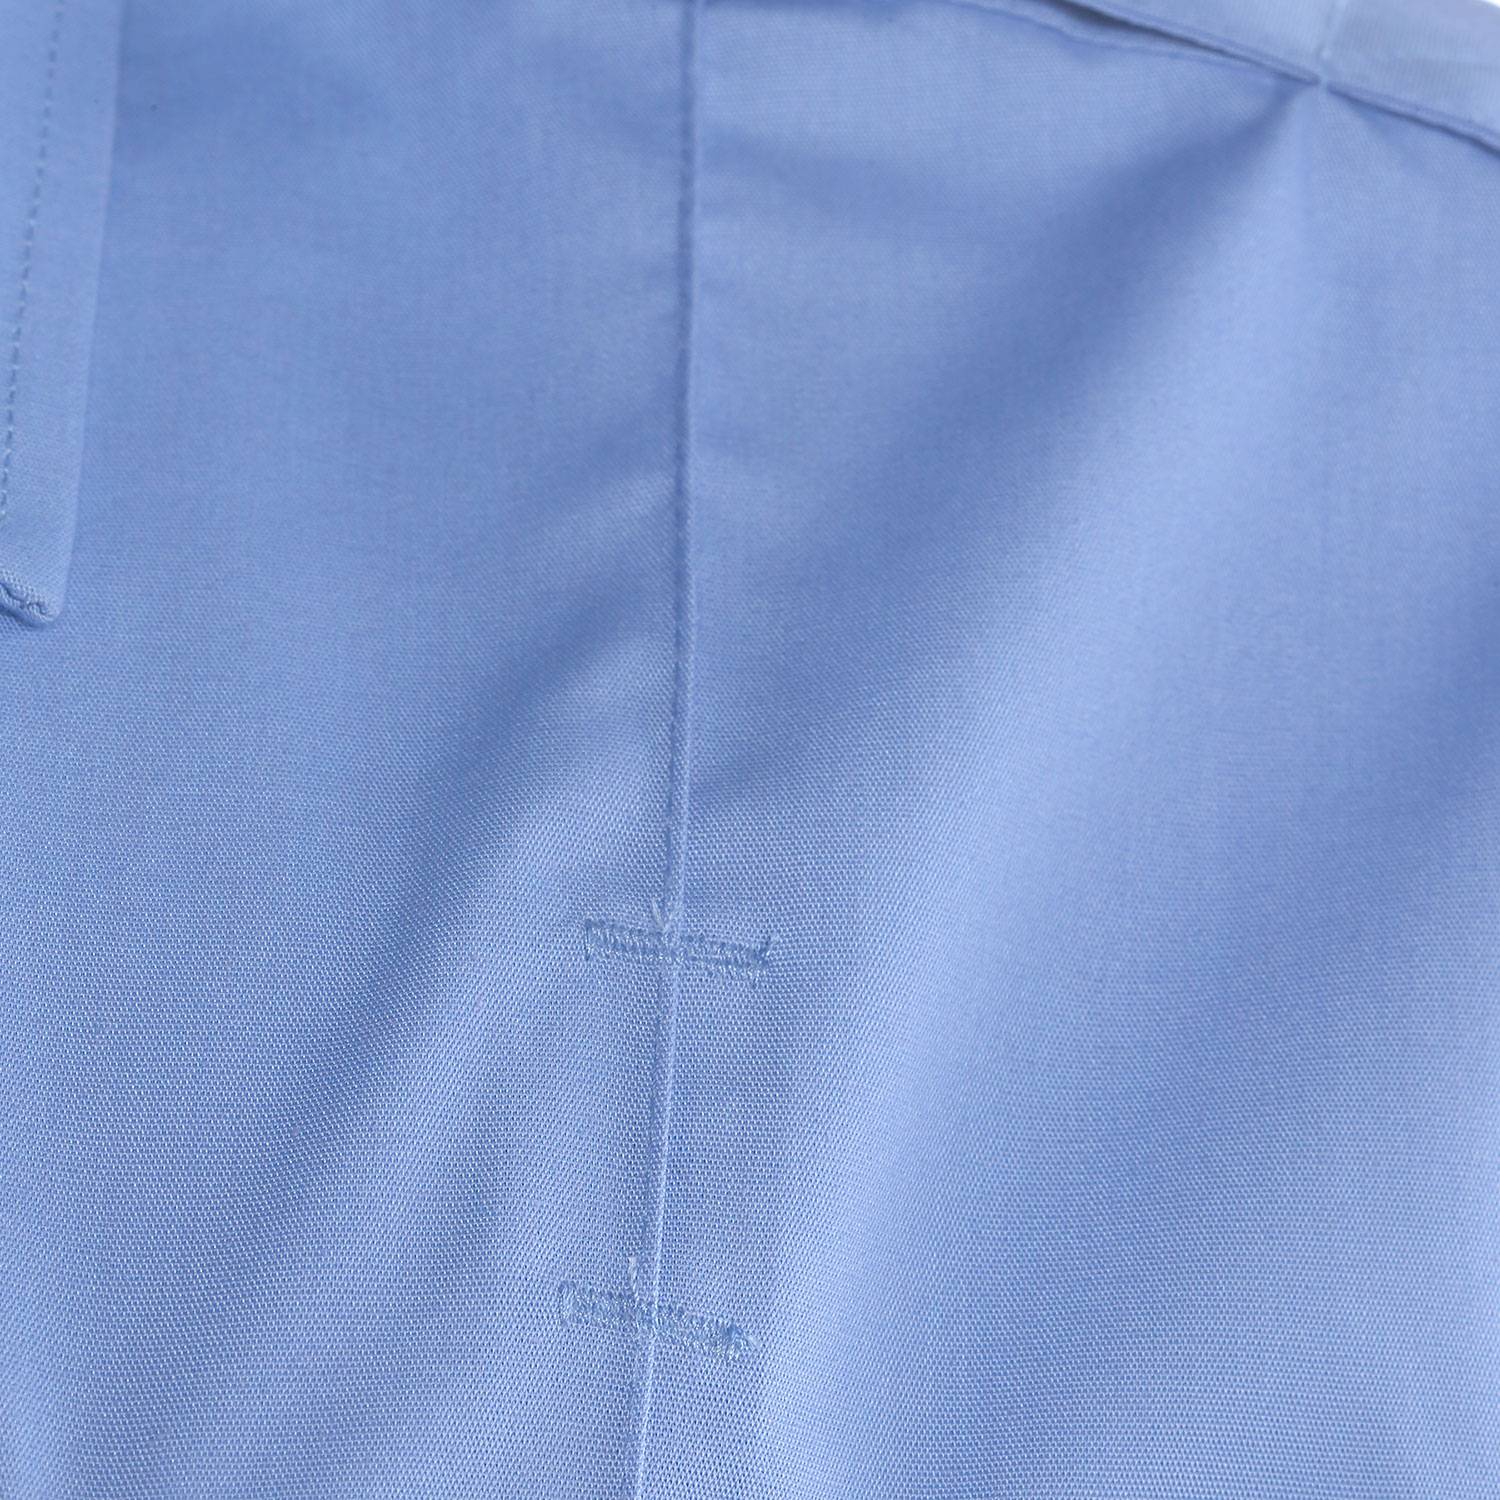 LawPro Poly Cotton Short Sleeve Premium Shirt